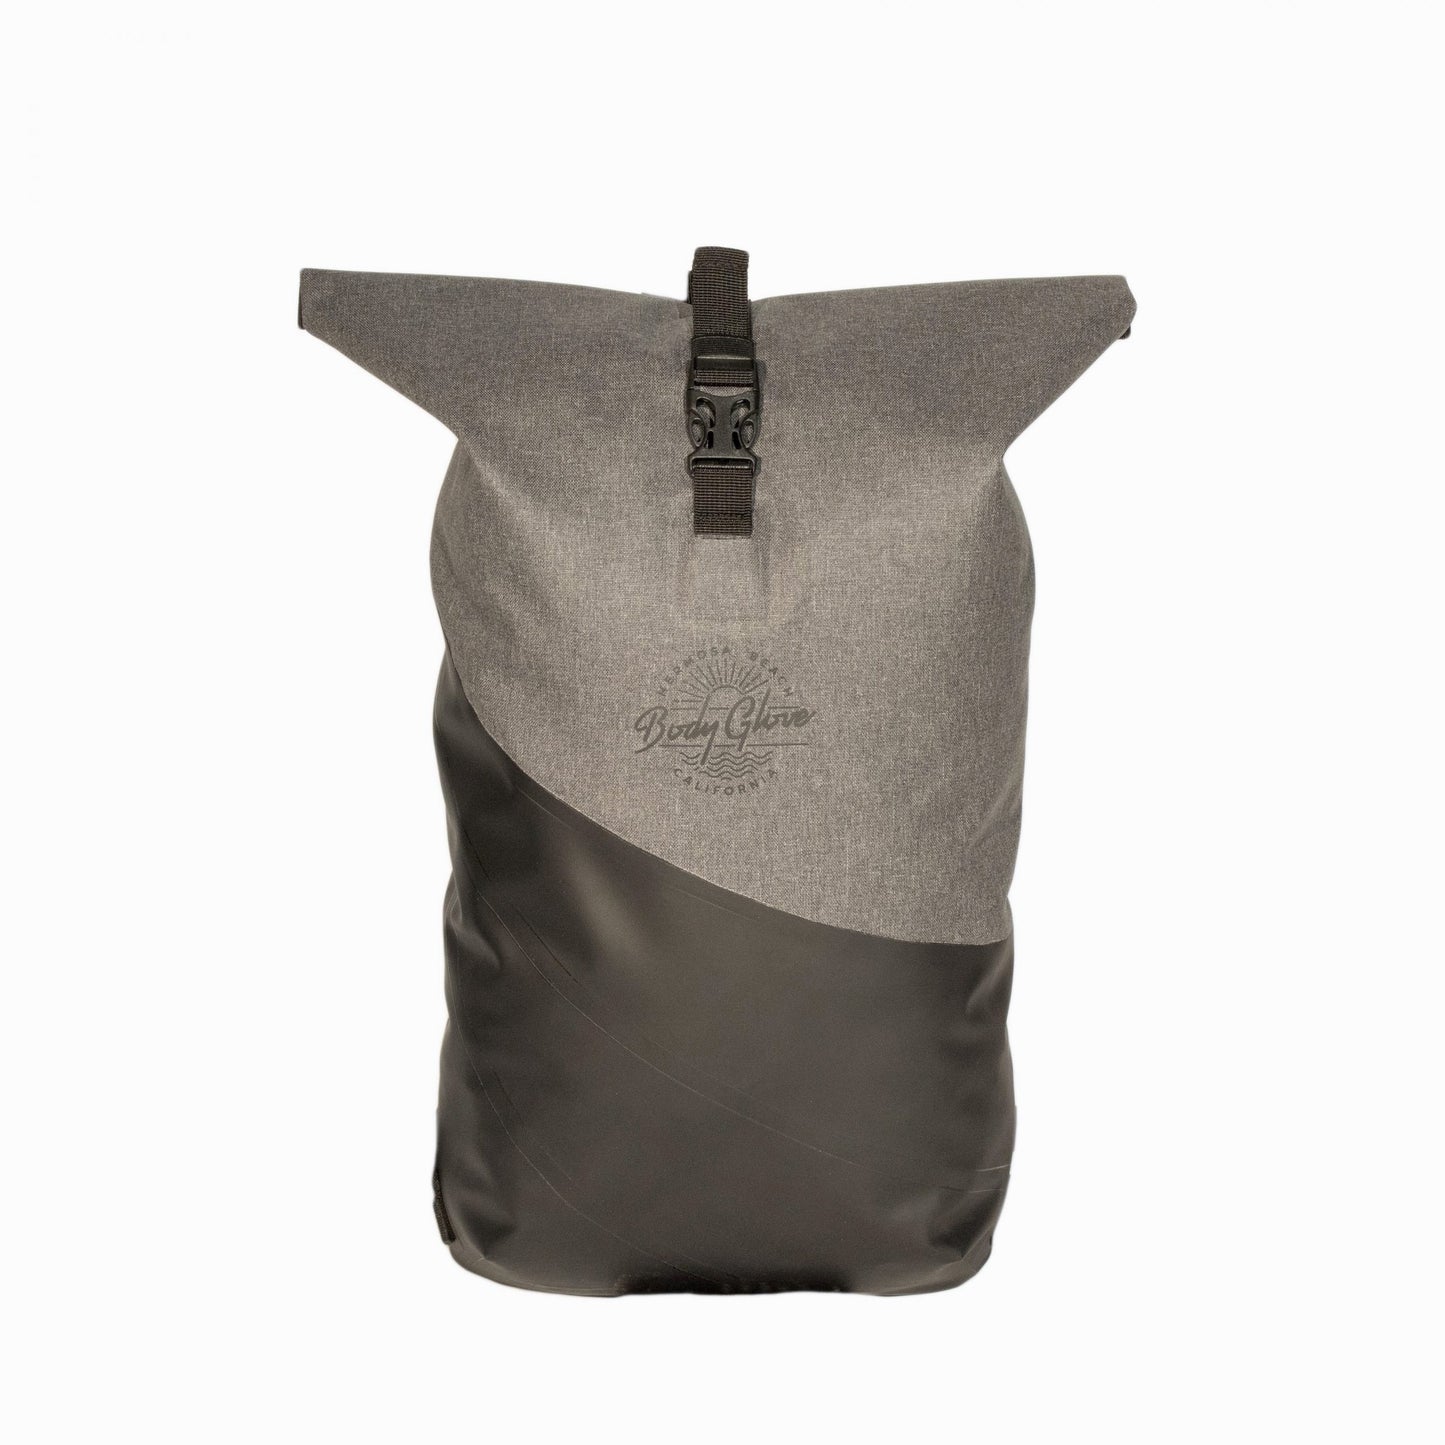 Body Glove Ralston Waterproof Roll-Top Backpack